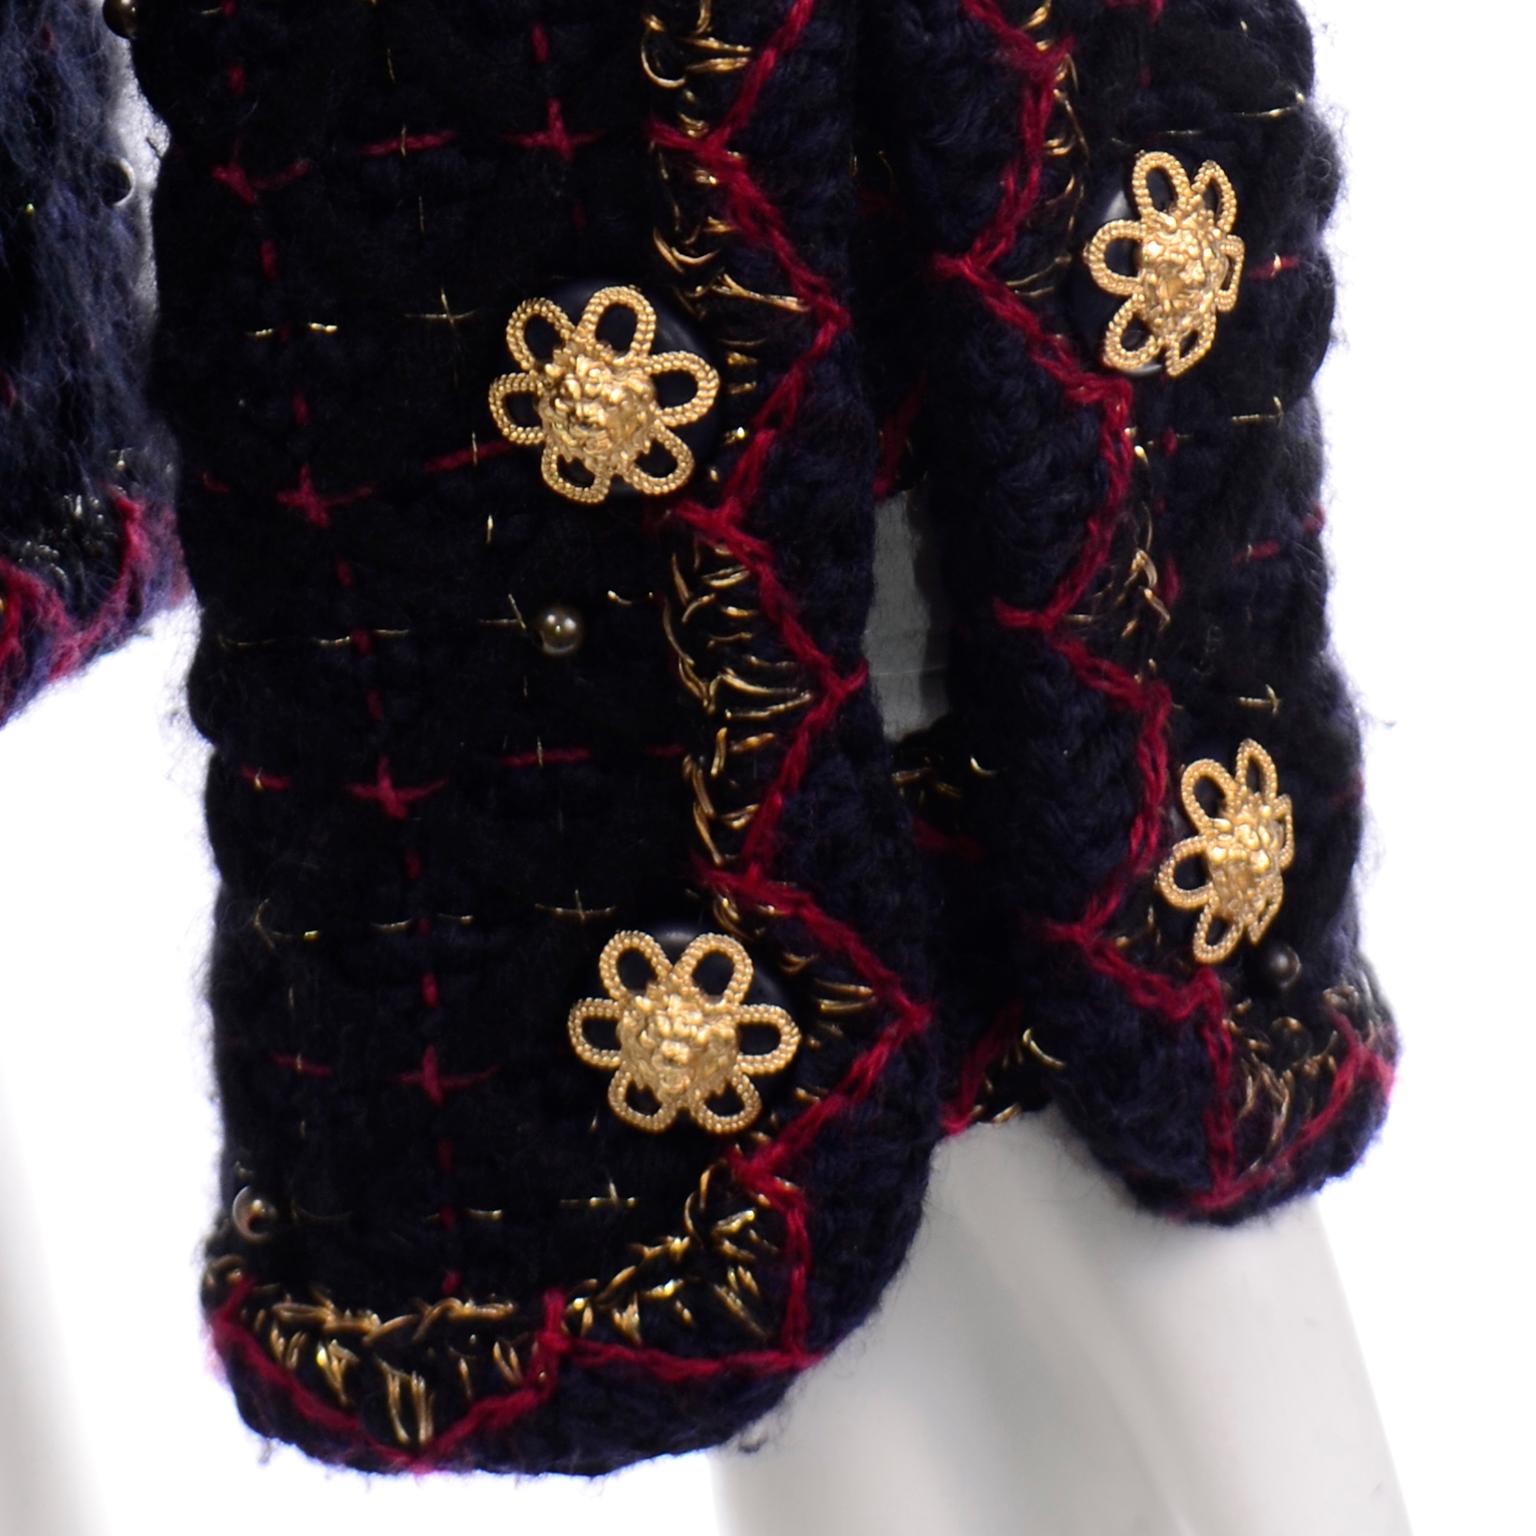 Chanel 2015 Paris Salzburg Collection $14250 Tweed Documented Runway Jacket 6